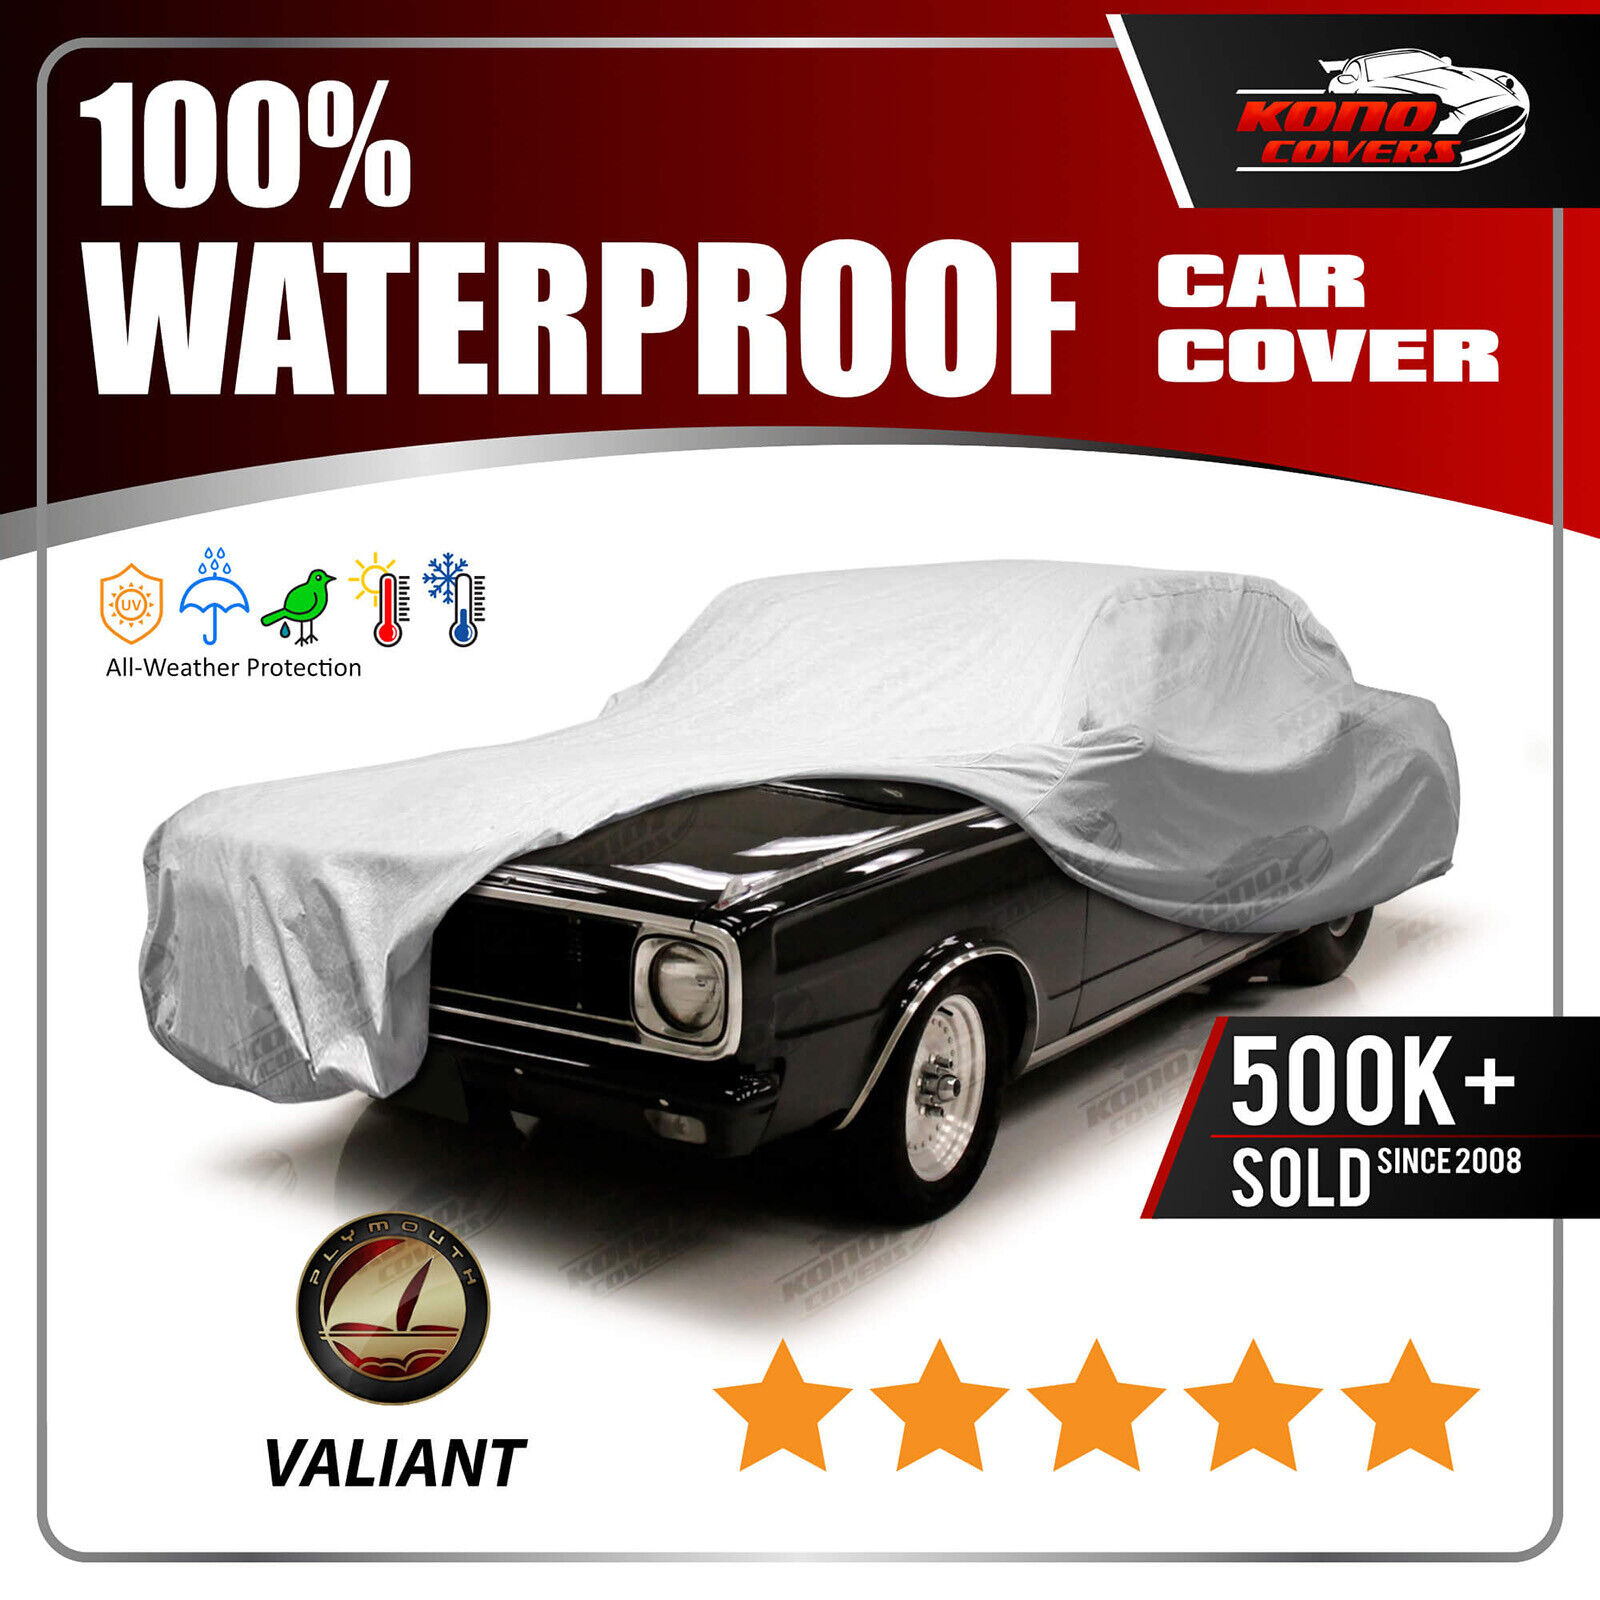 PLYMOUTH VALIANT 2-Door 1963-1966 CAR COVER - 100% Waterproof 100% Breathable